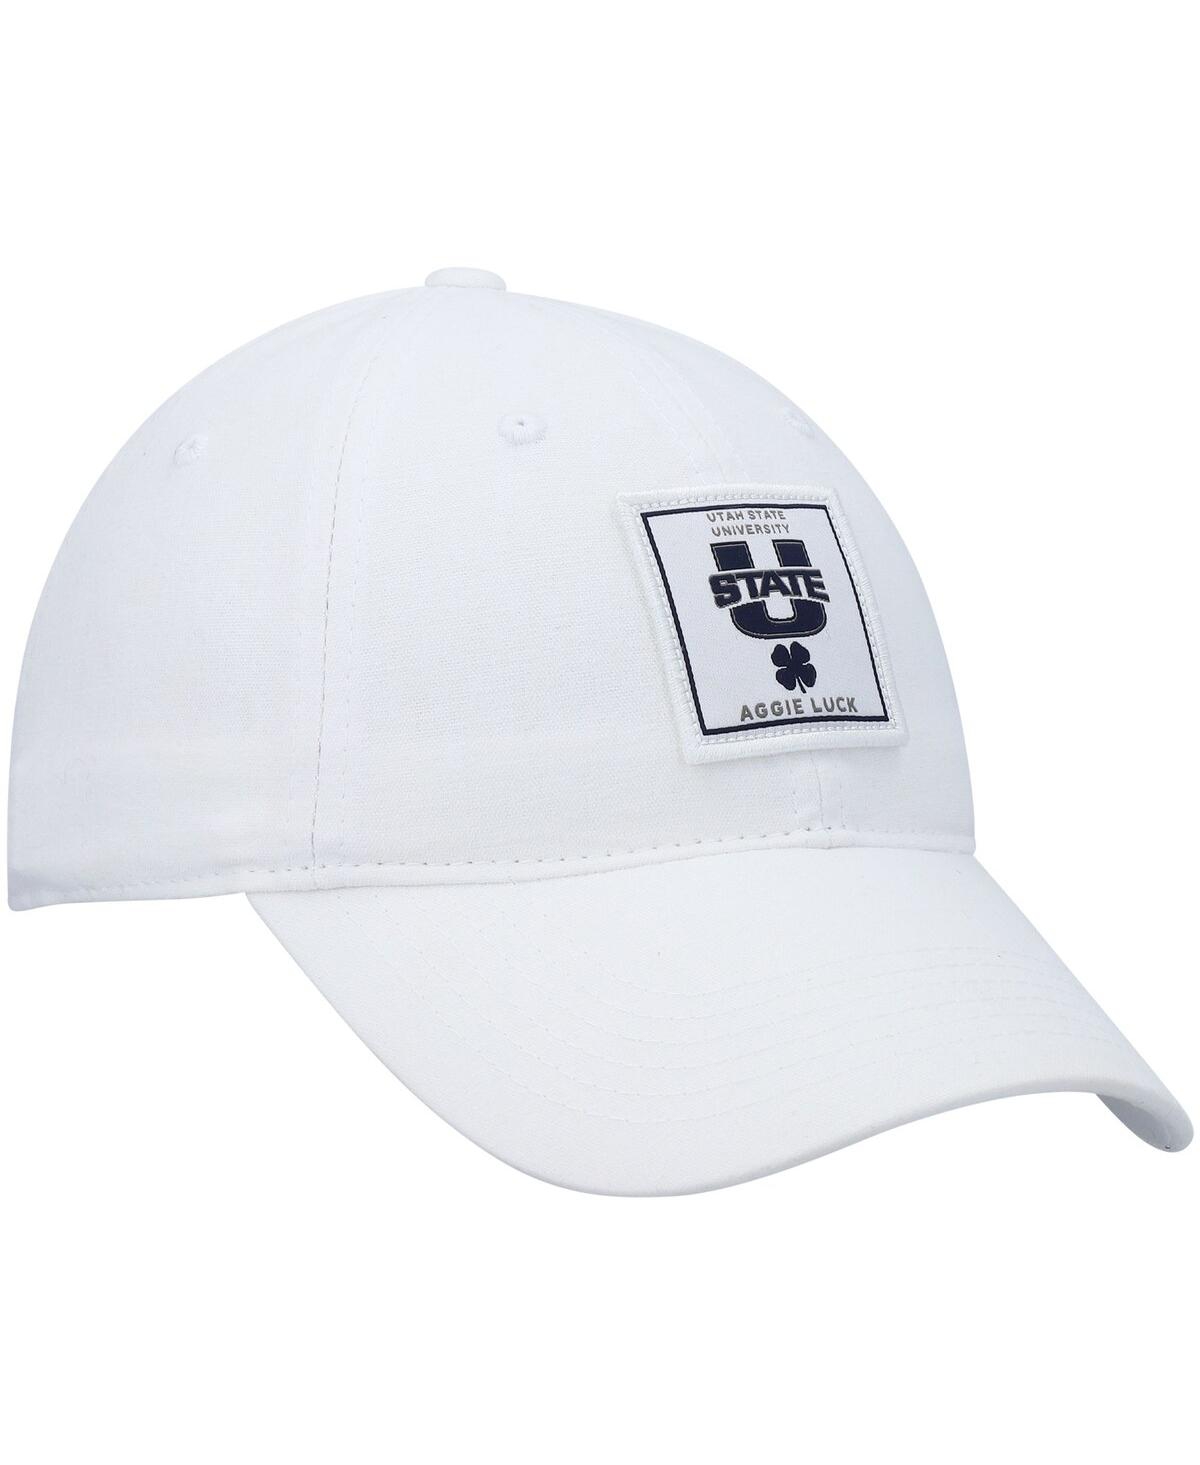 Shop Black Clover Men's White Utah State Aggies Dream Adjustable Hat